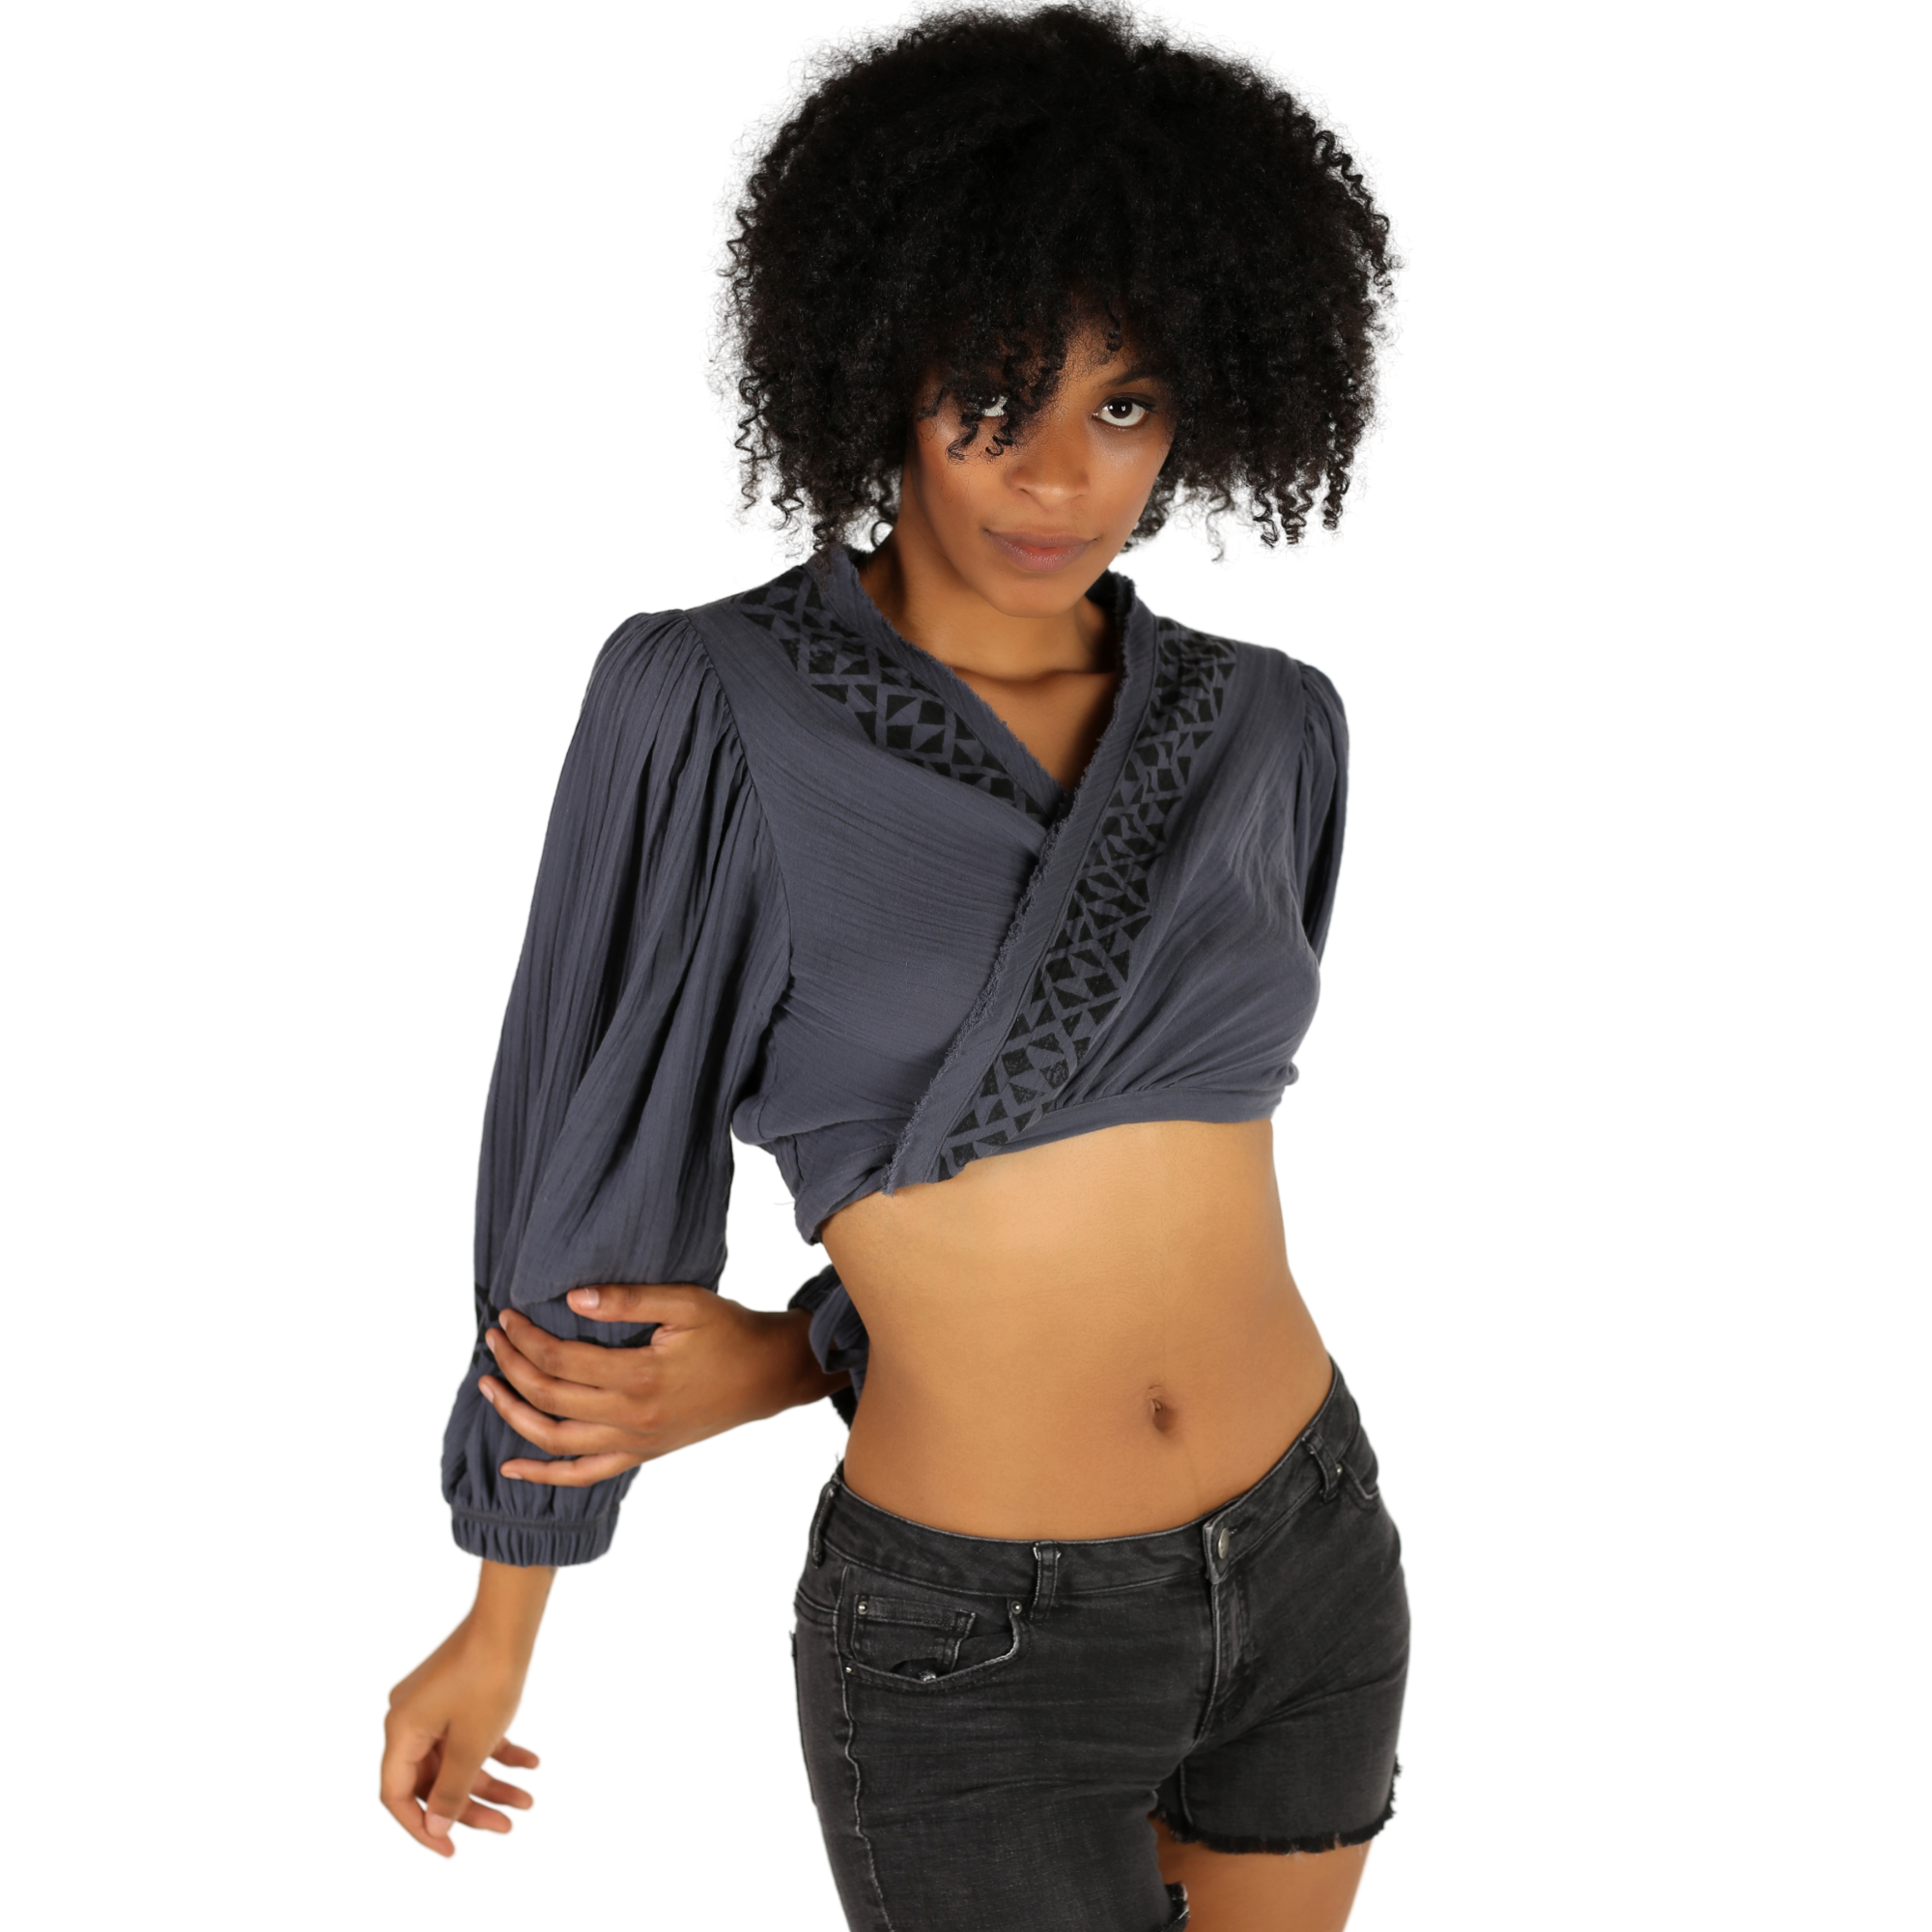 Black Women Cotton Top, long sleeve, wrap tie back crop top blouse